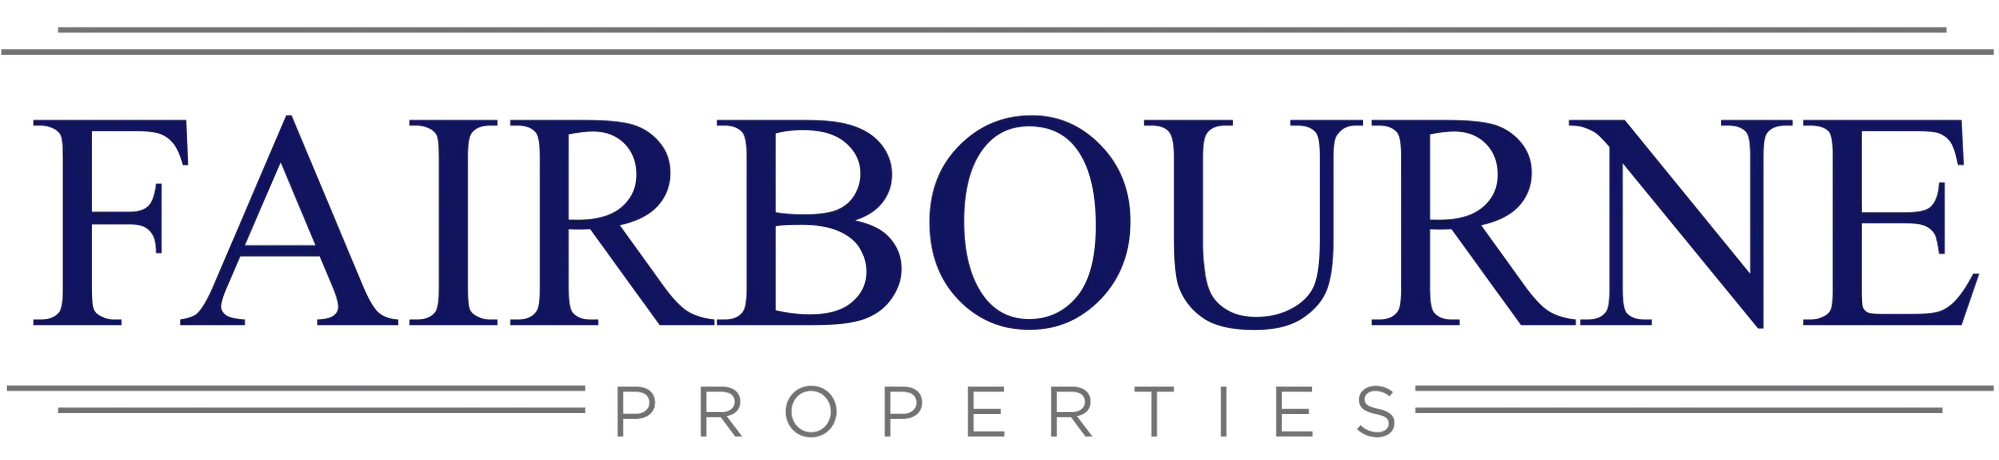 Fairbourne Properties Logo 